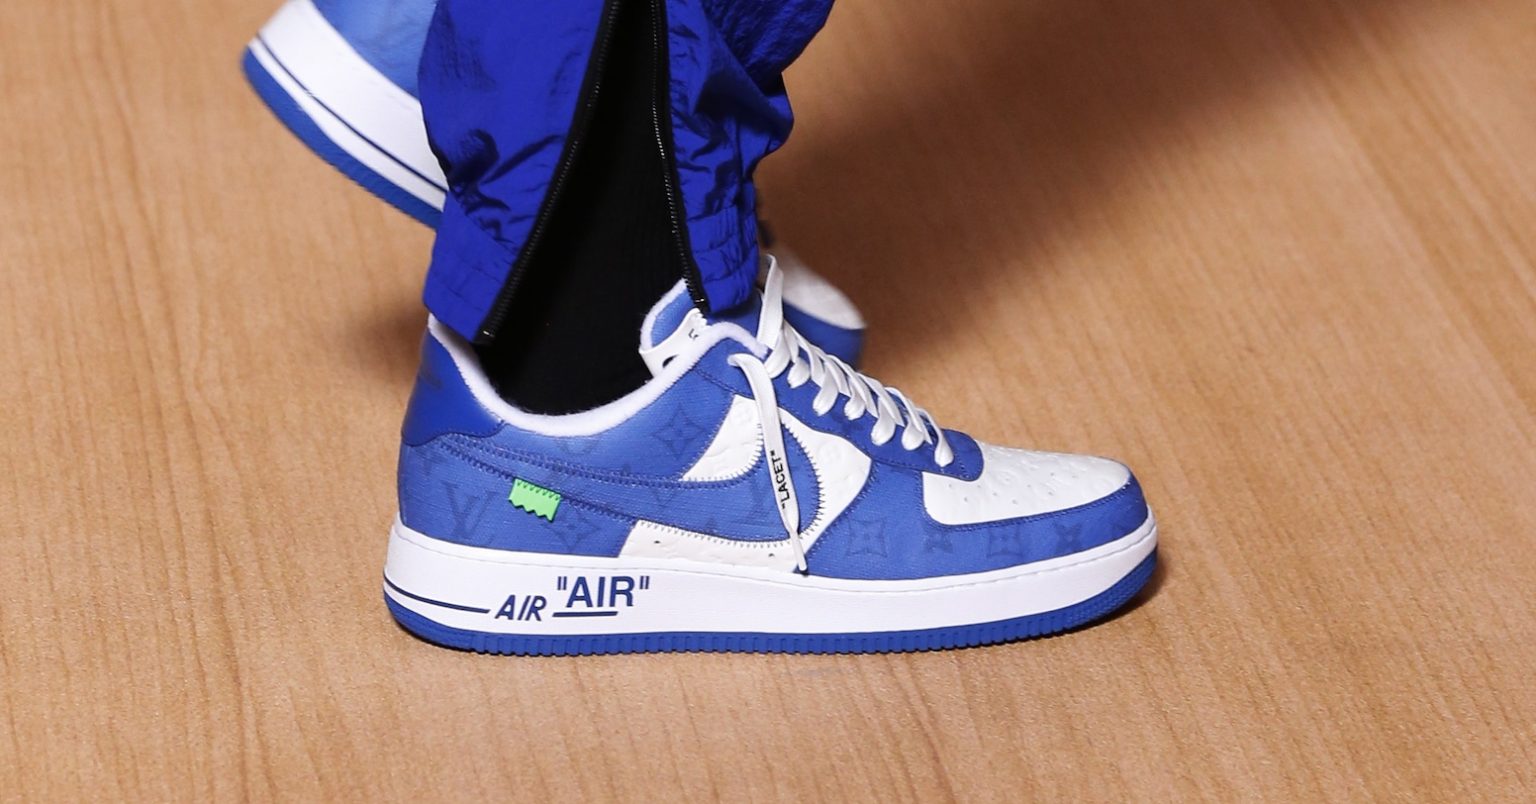 Virgil Abloh remixes Air Force 1 sneakers for Nike x Louis Vuitton